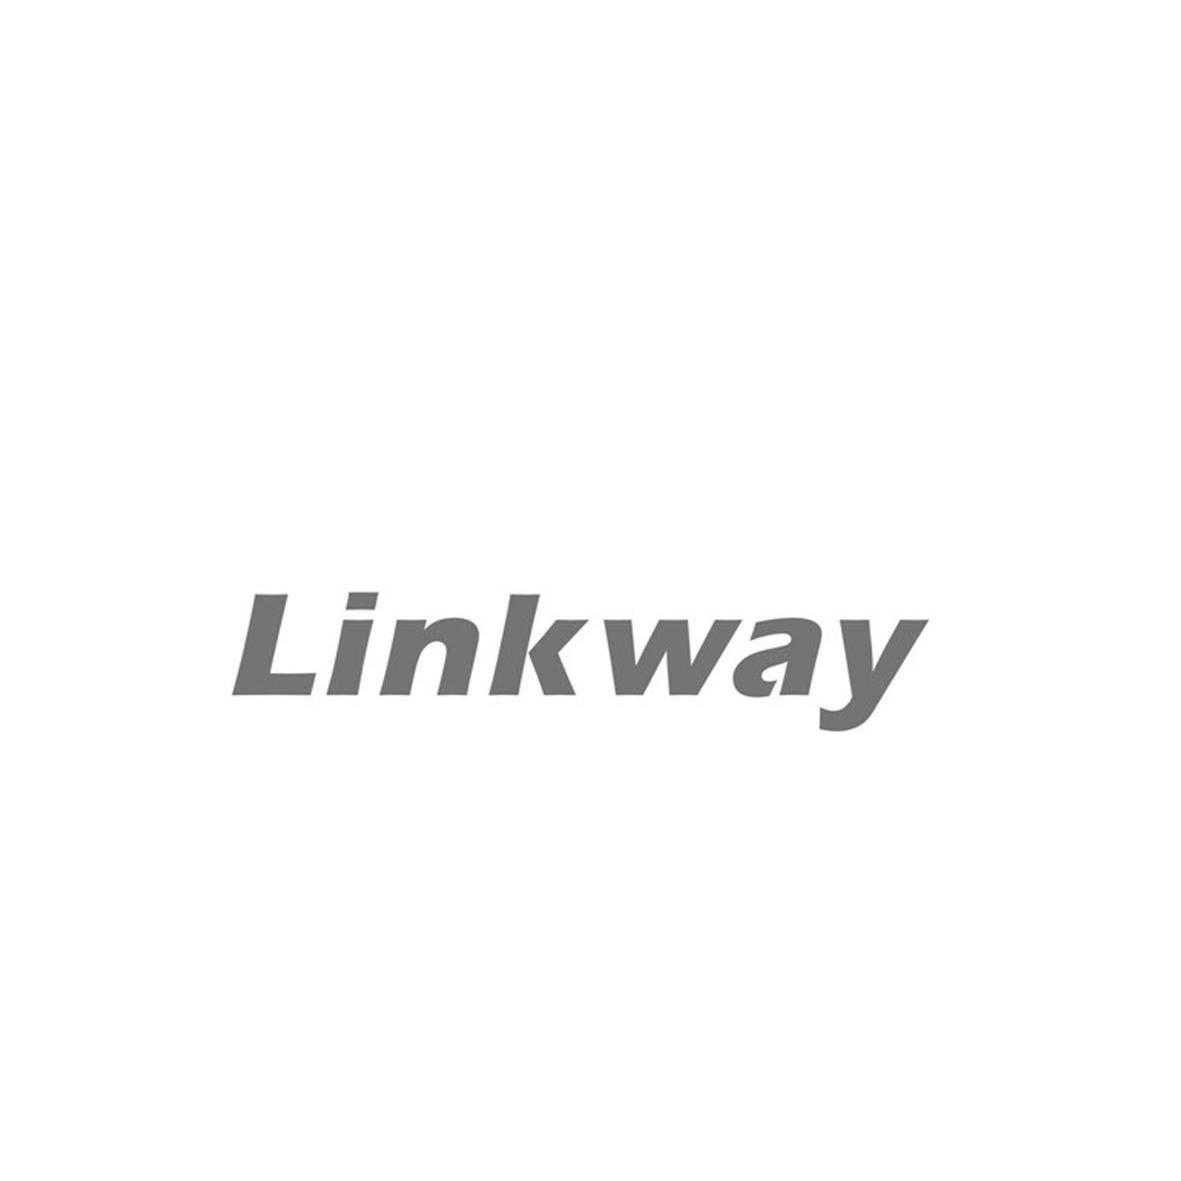 Linkway